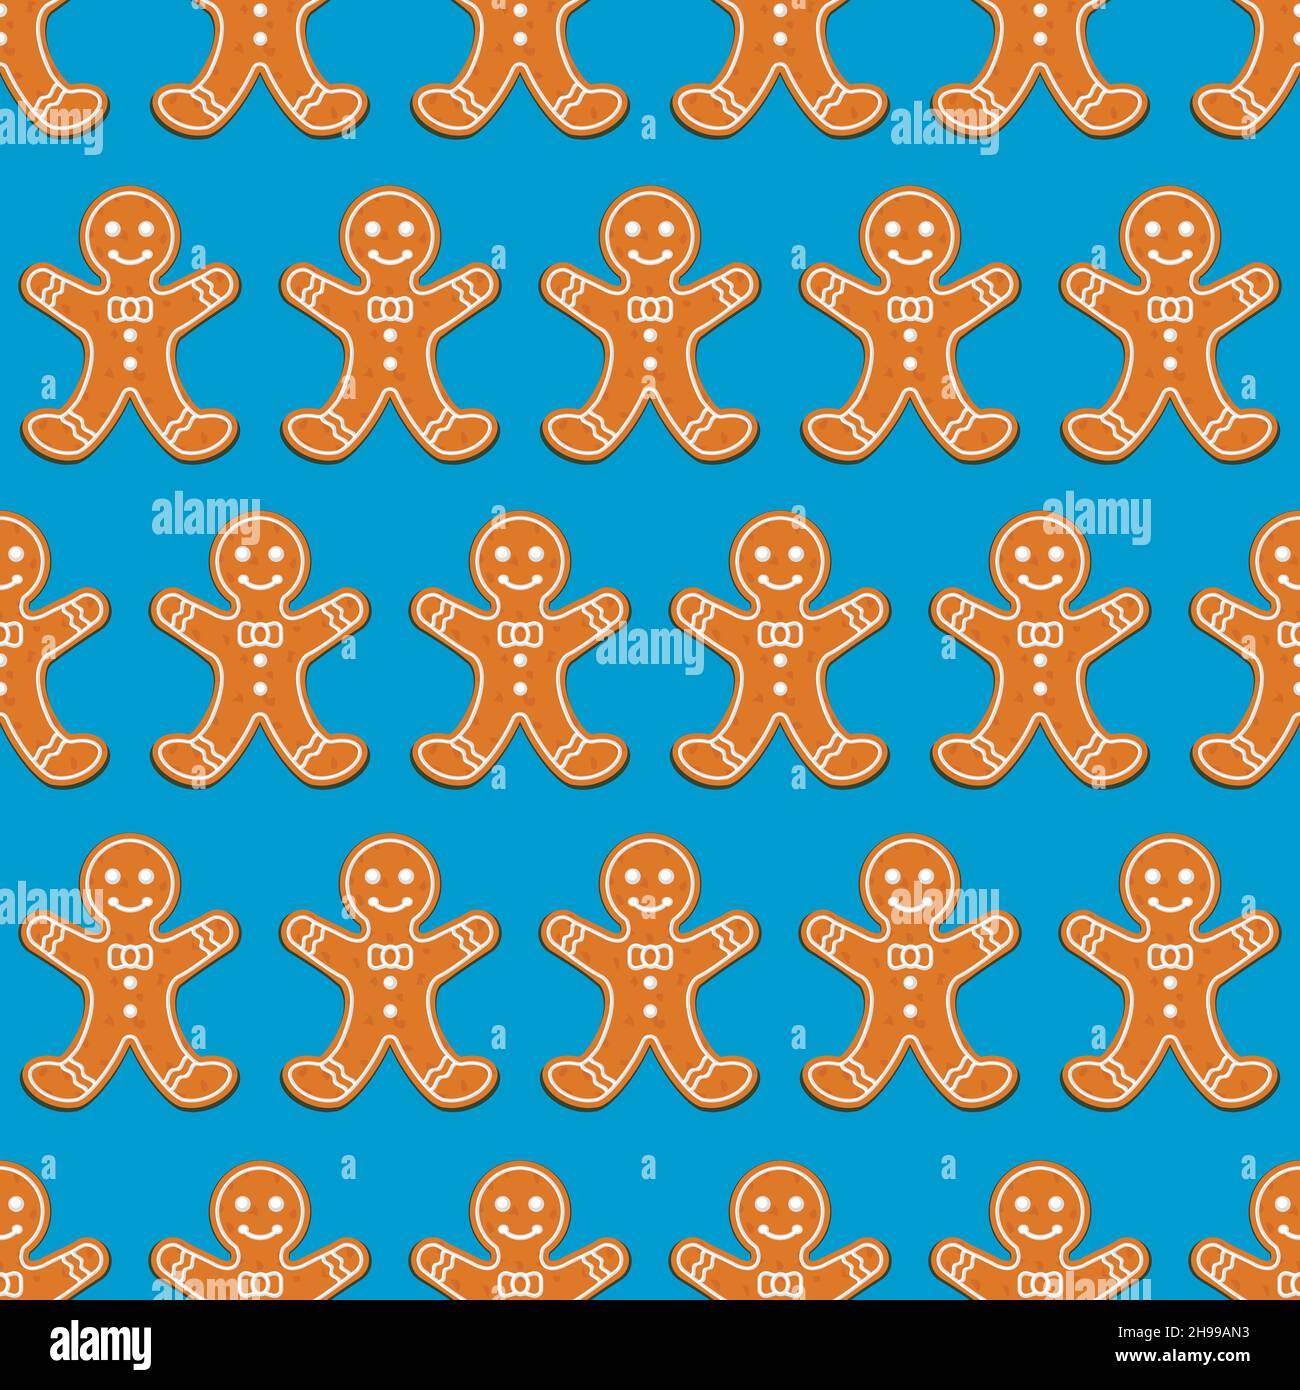 Christmas gingerbread man cookies seamless pattern Stock Vector